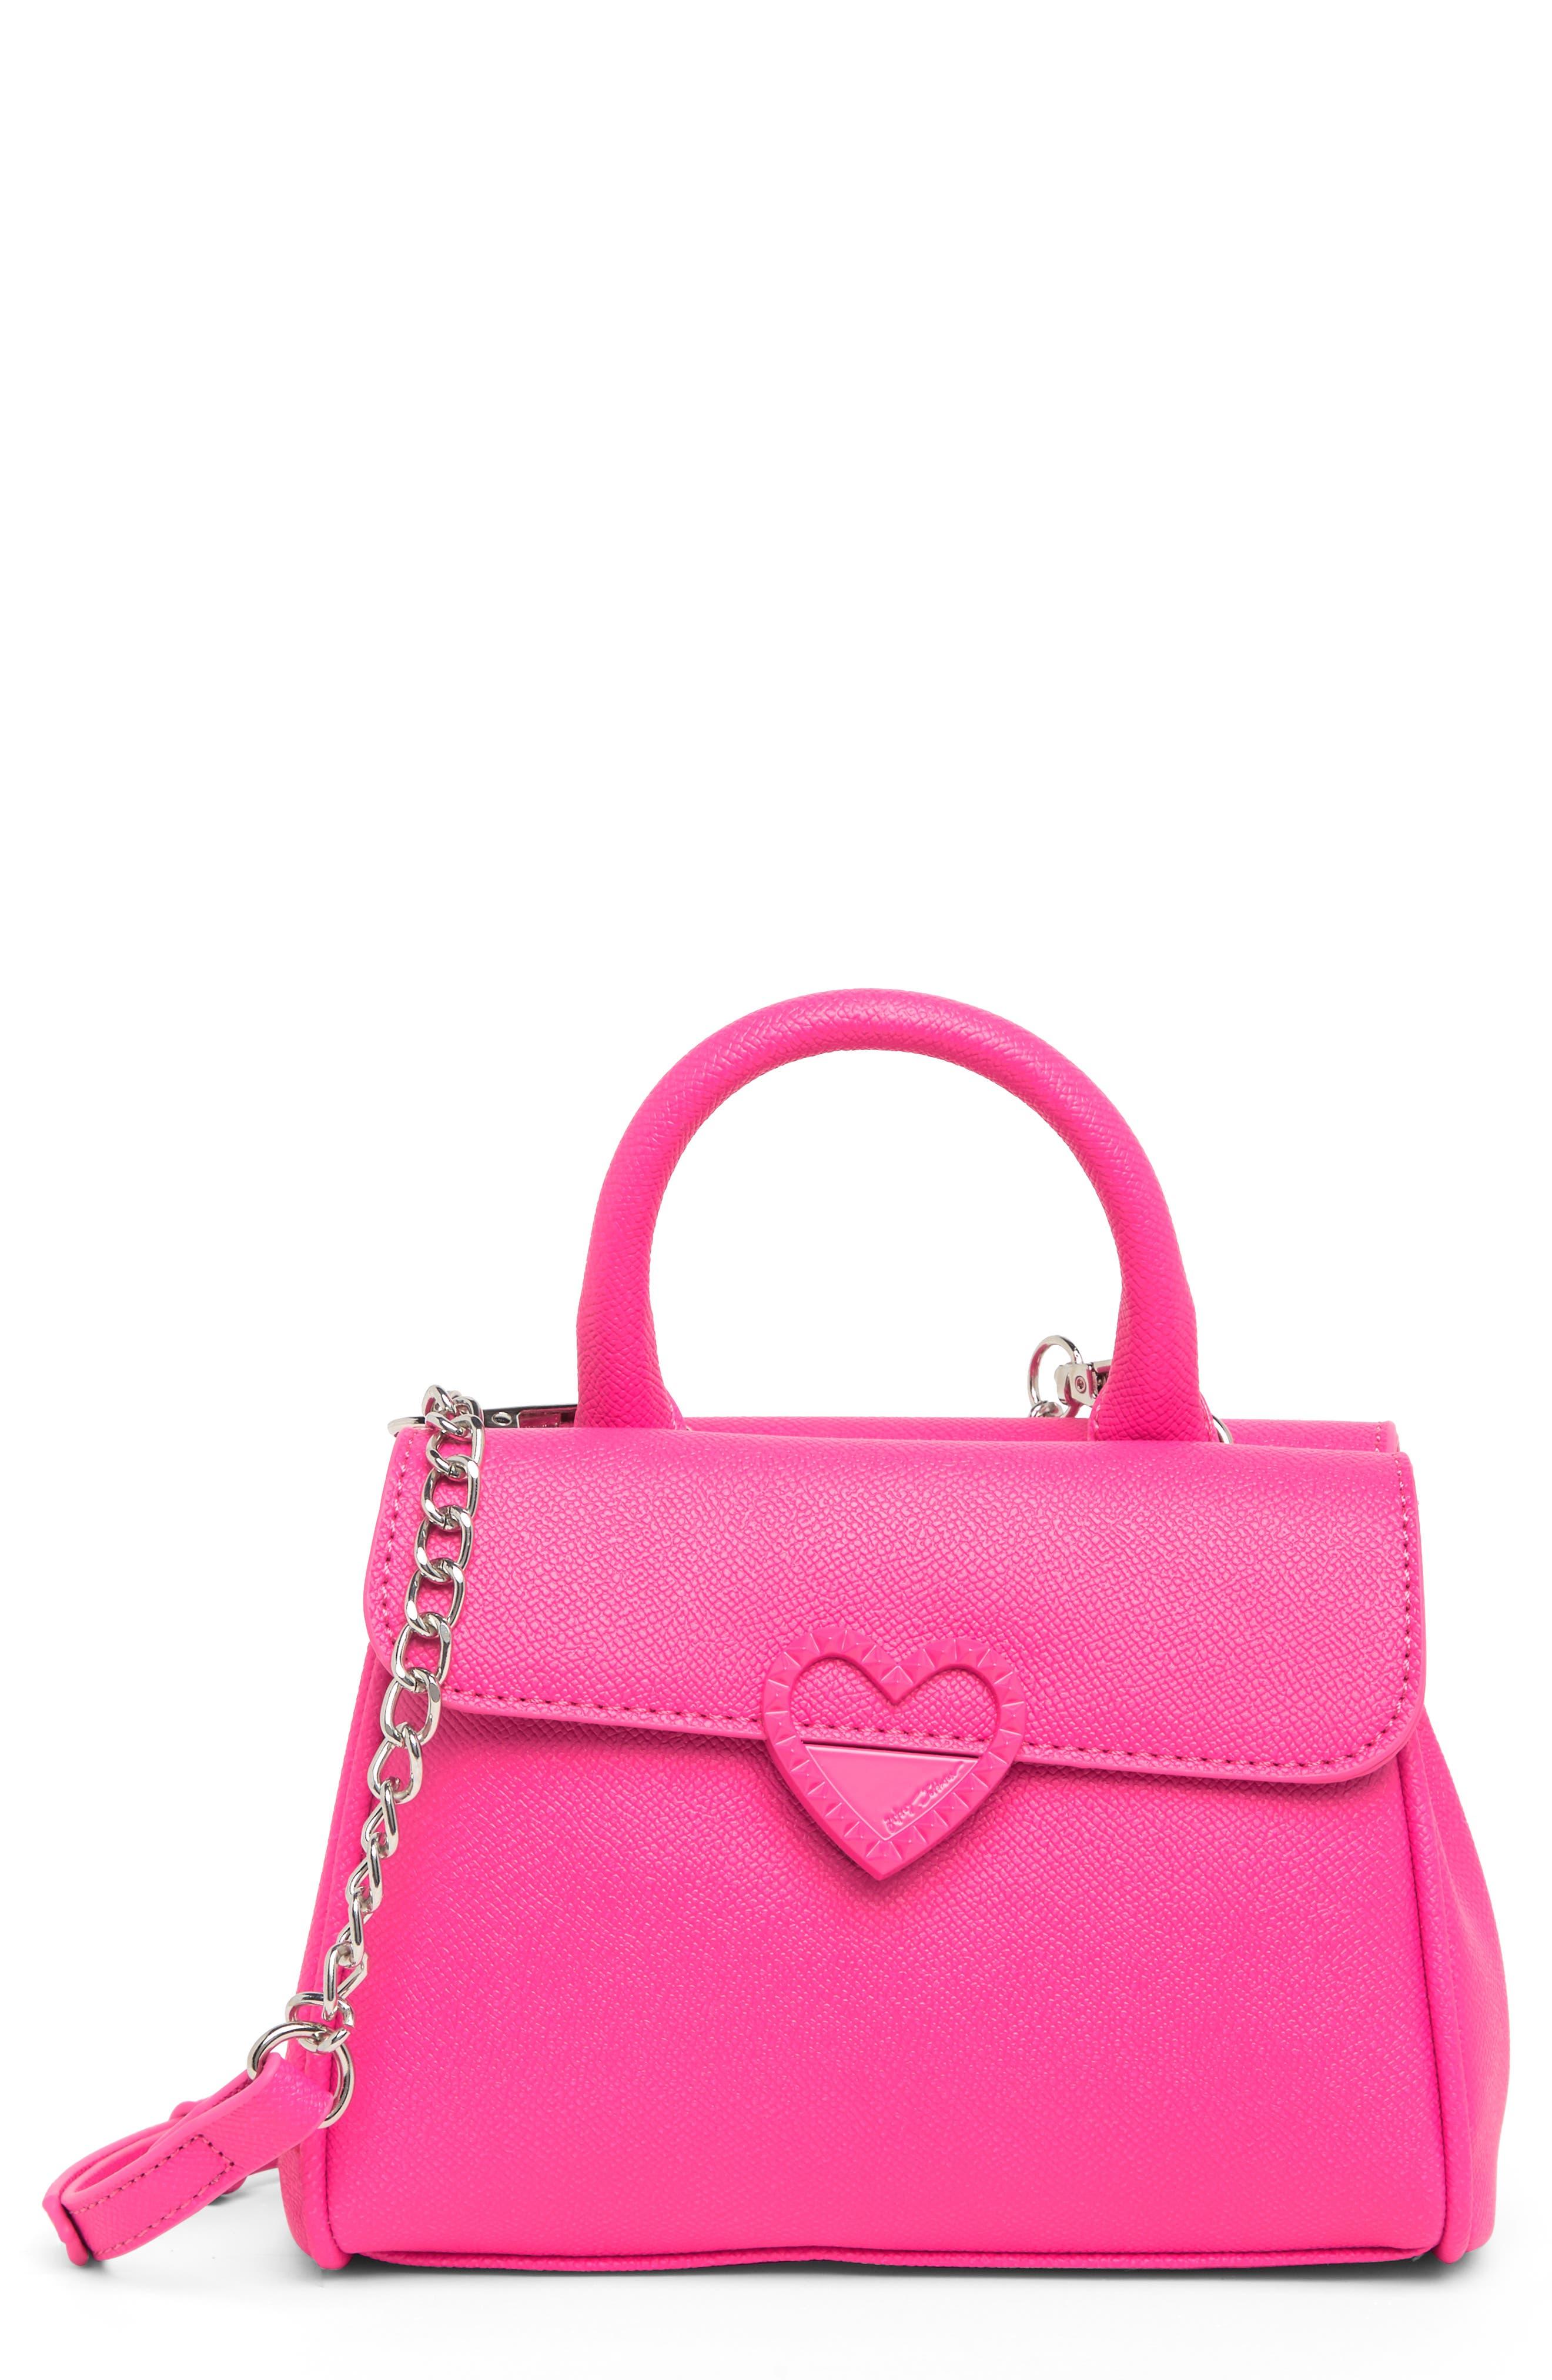 RUFFLE FLAP BAG LEOPARD Handbag | Women's Handbags – Betsey Johnson